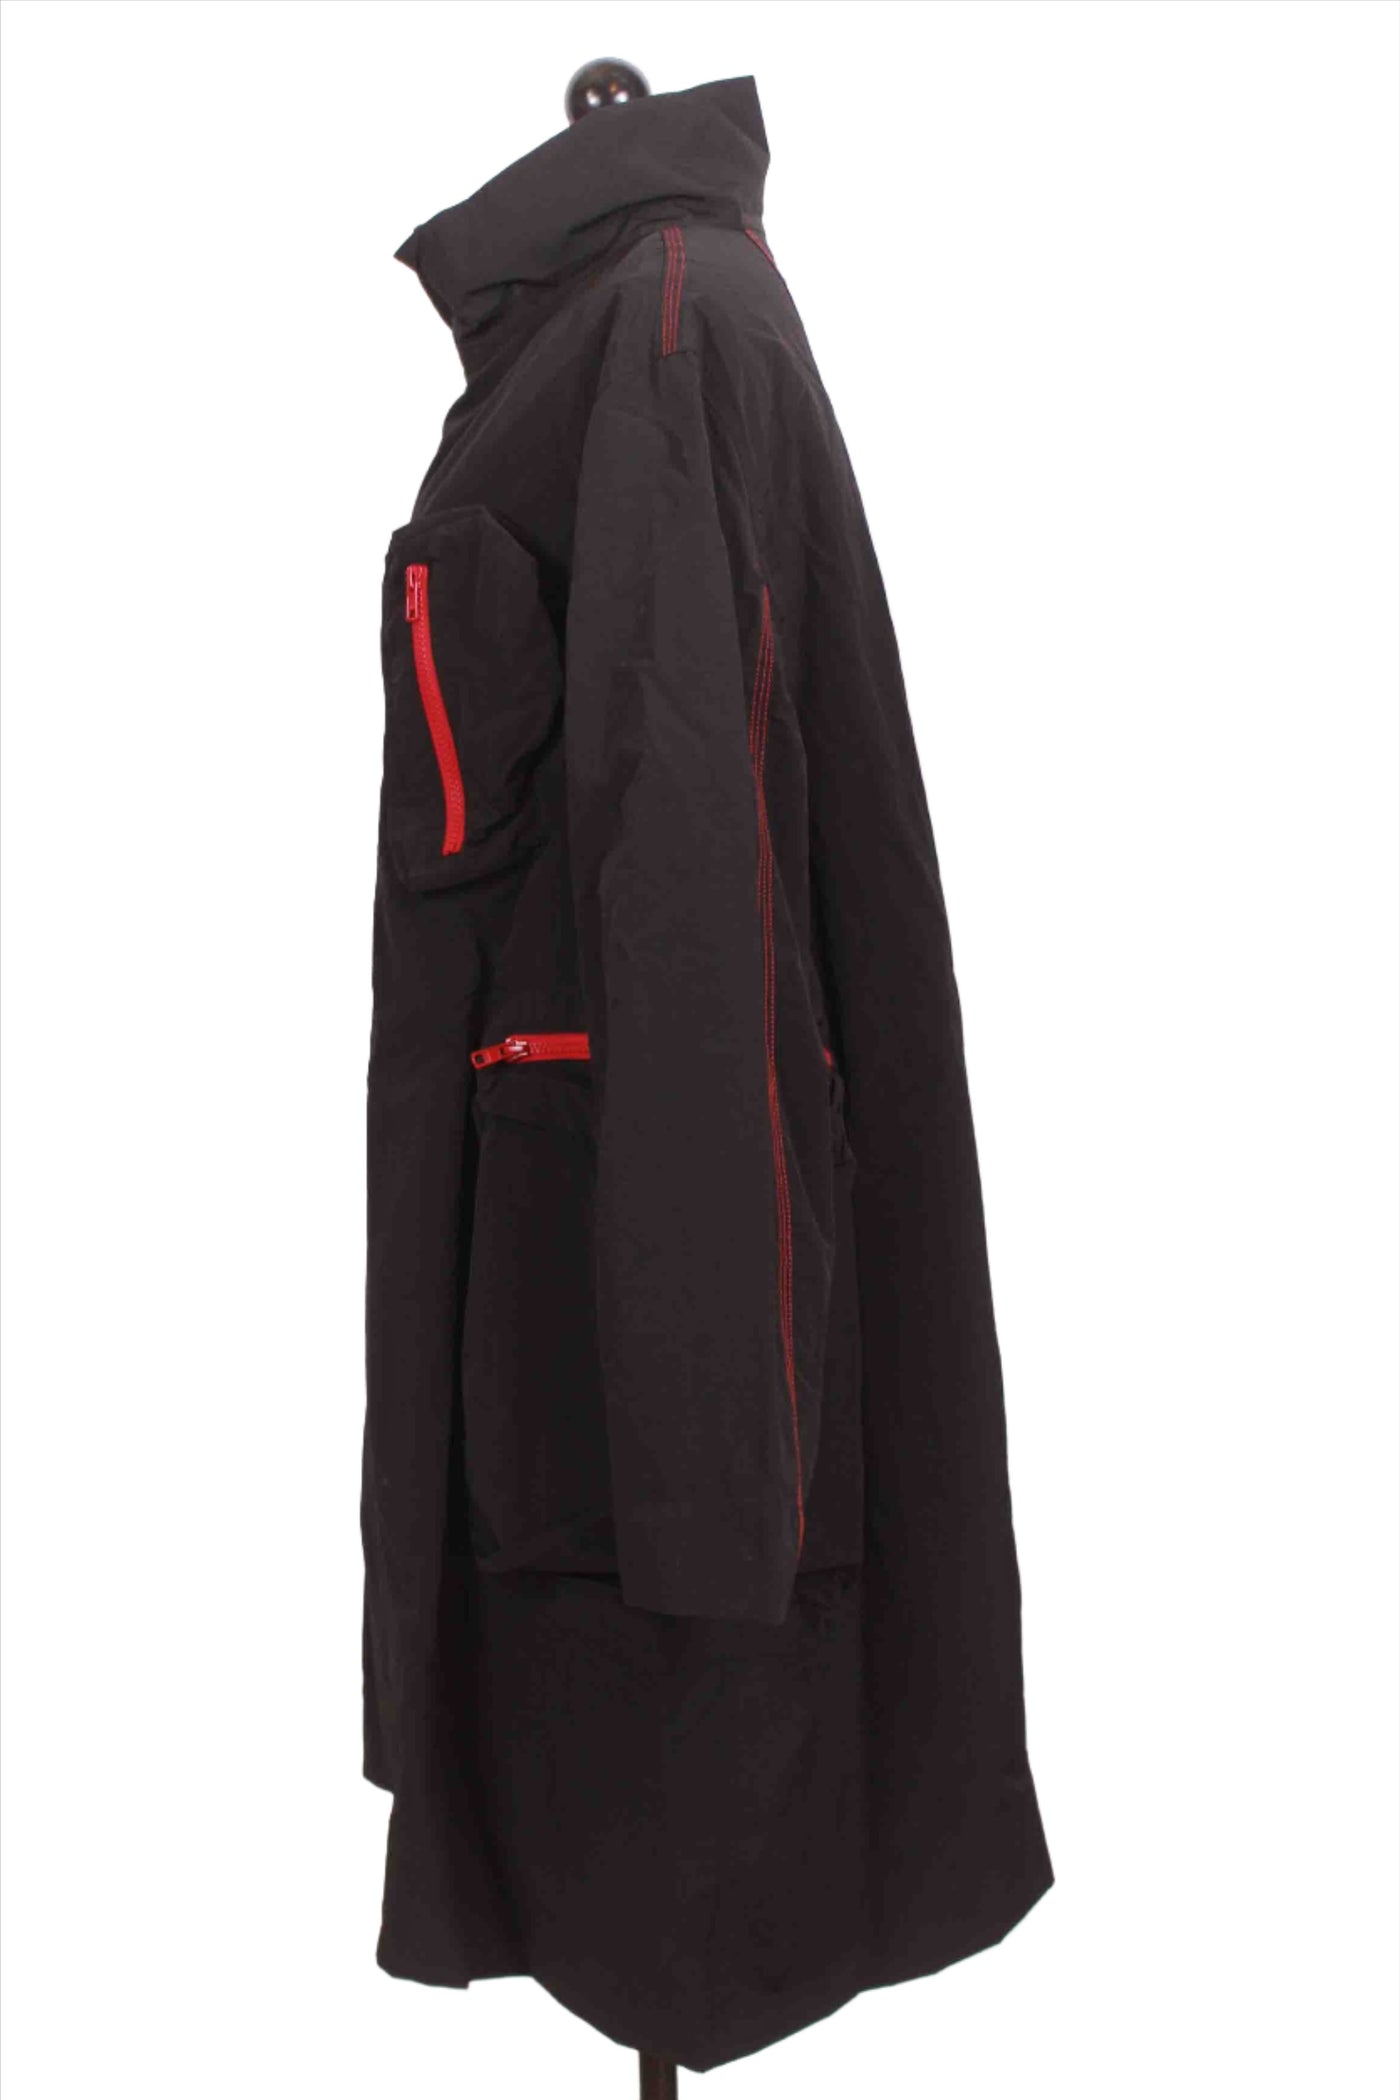 side view of Red Zippered Nylon Black Coat by Moyuru